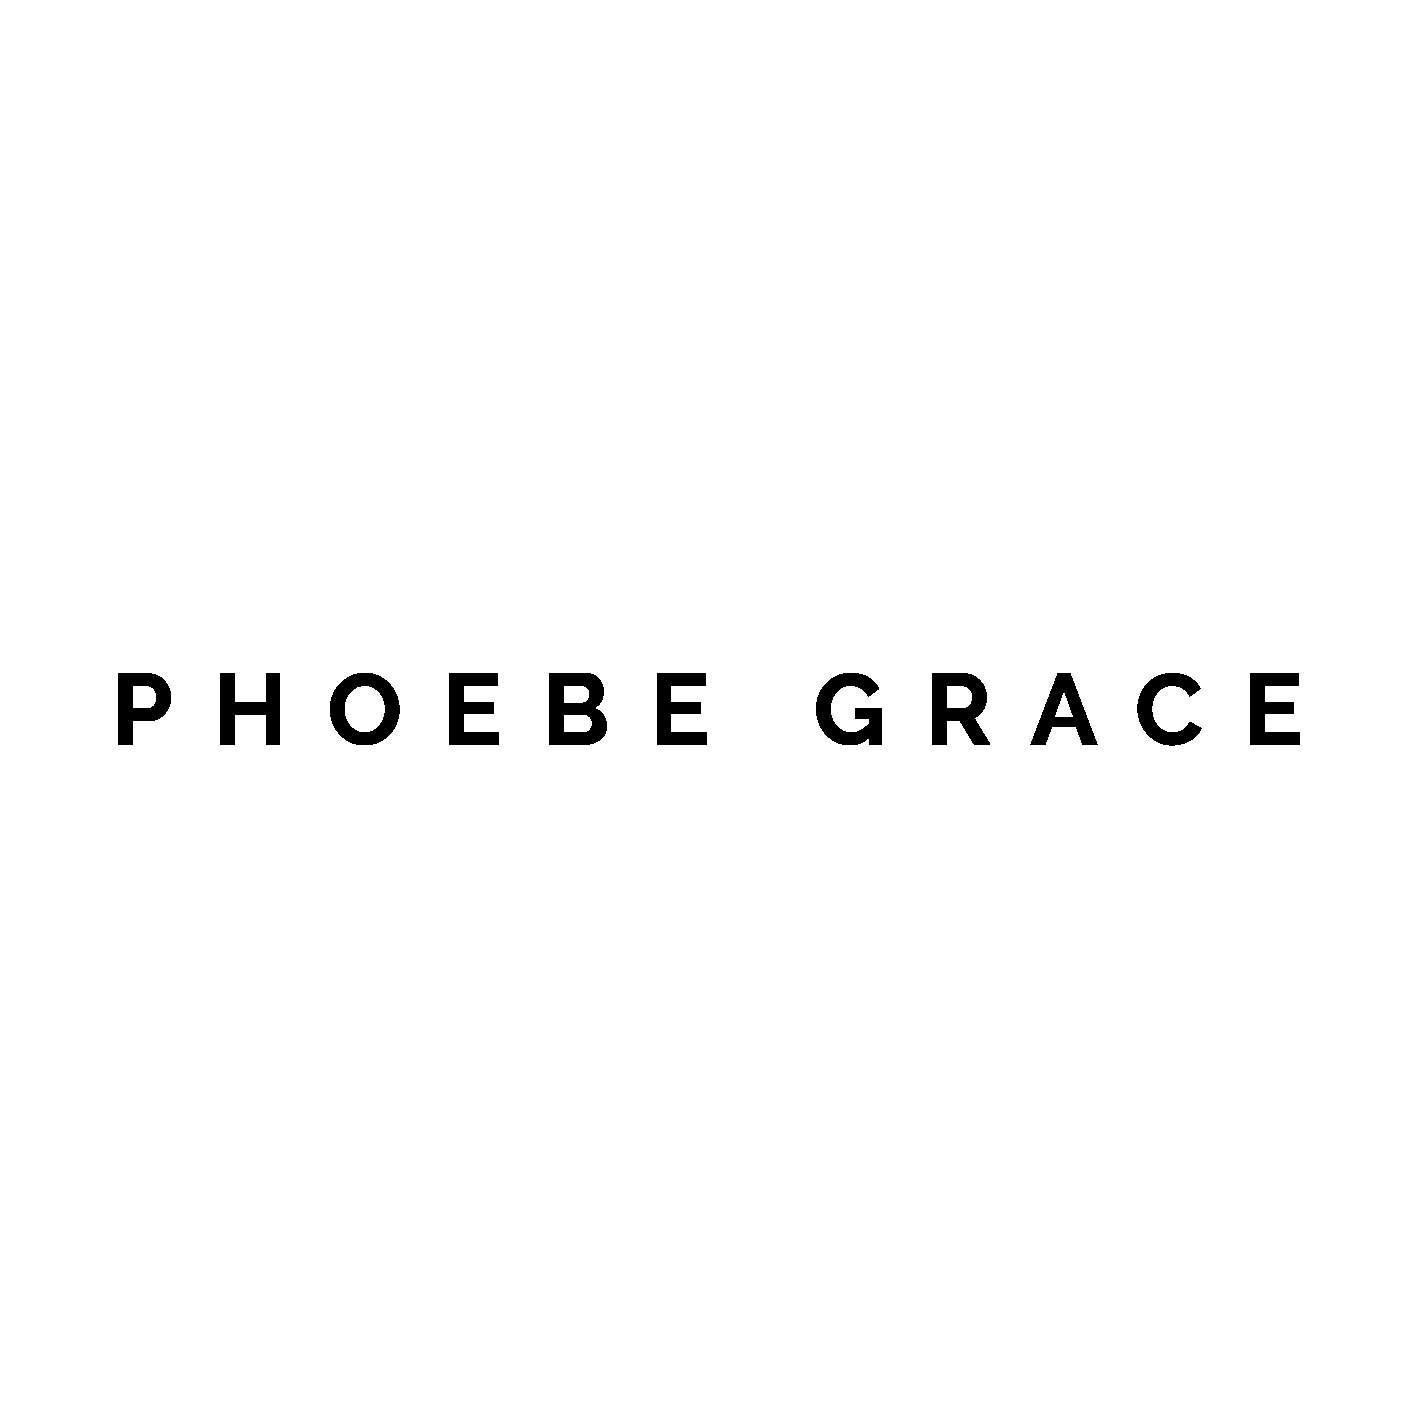 SQ - Phoebe Grace.png